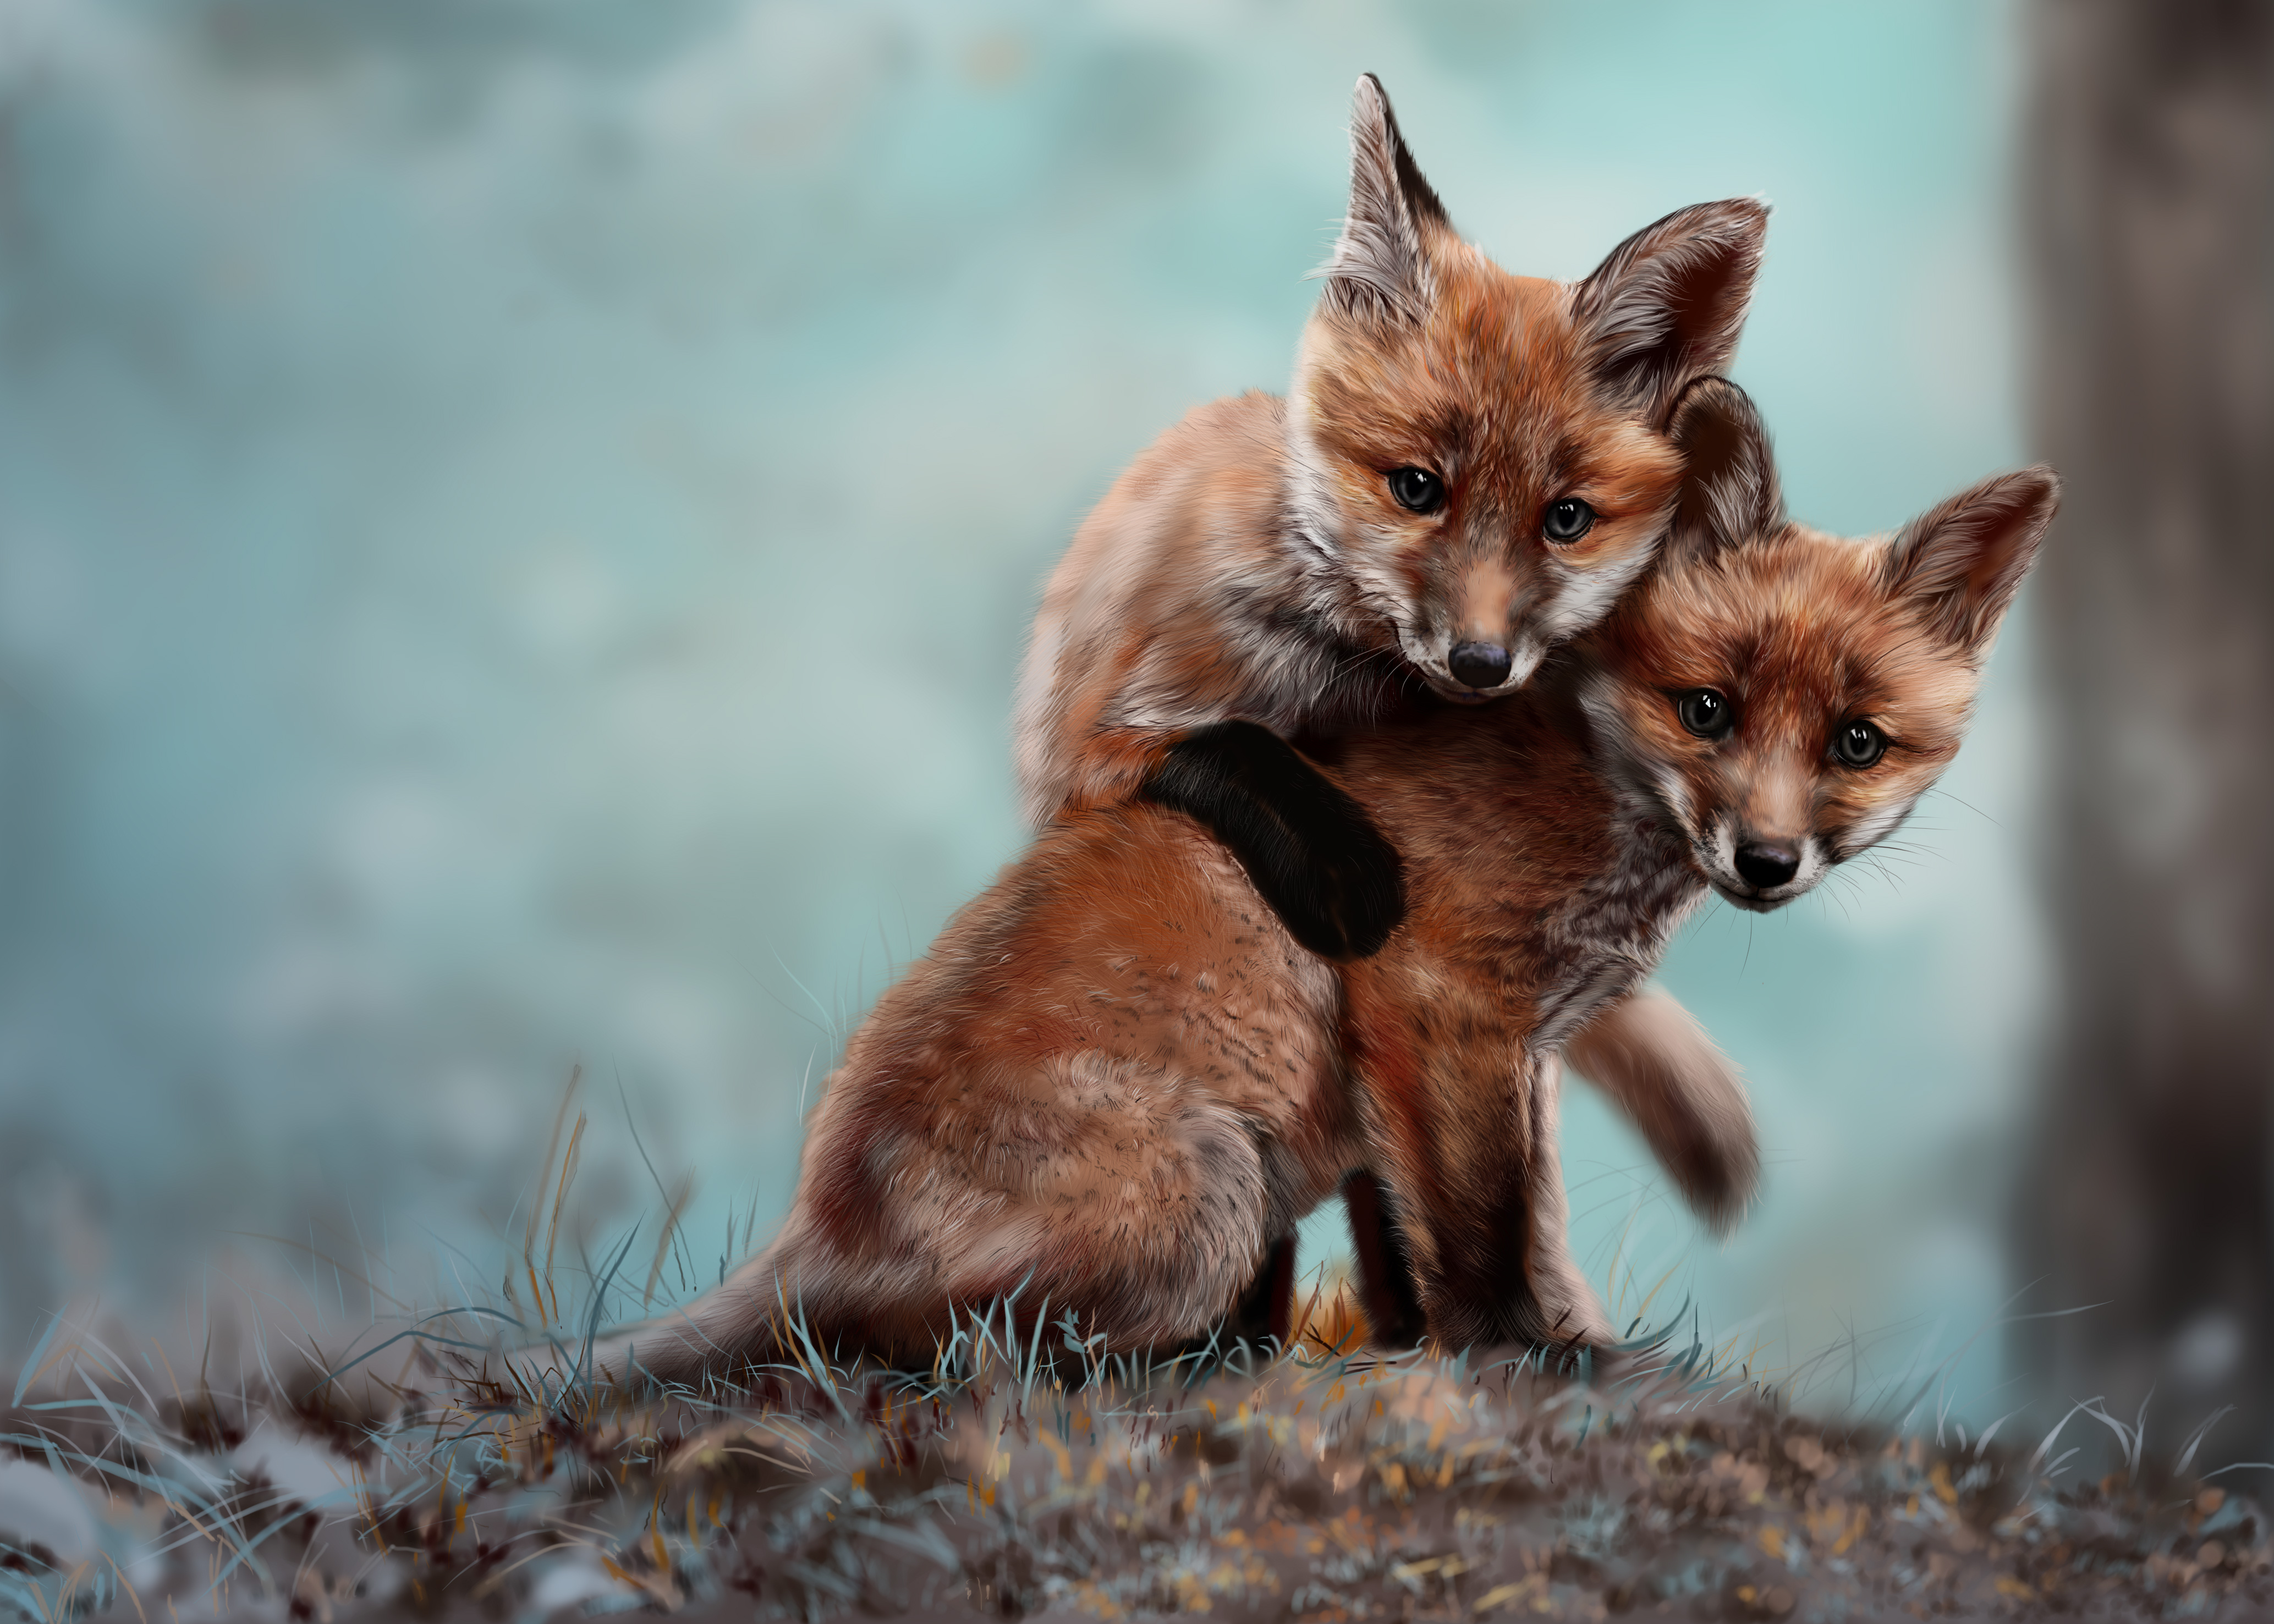 Two babies one fox на русском. Природа и животные. Лиса. Лисята. Милые лисята.